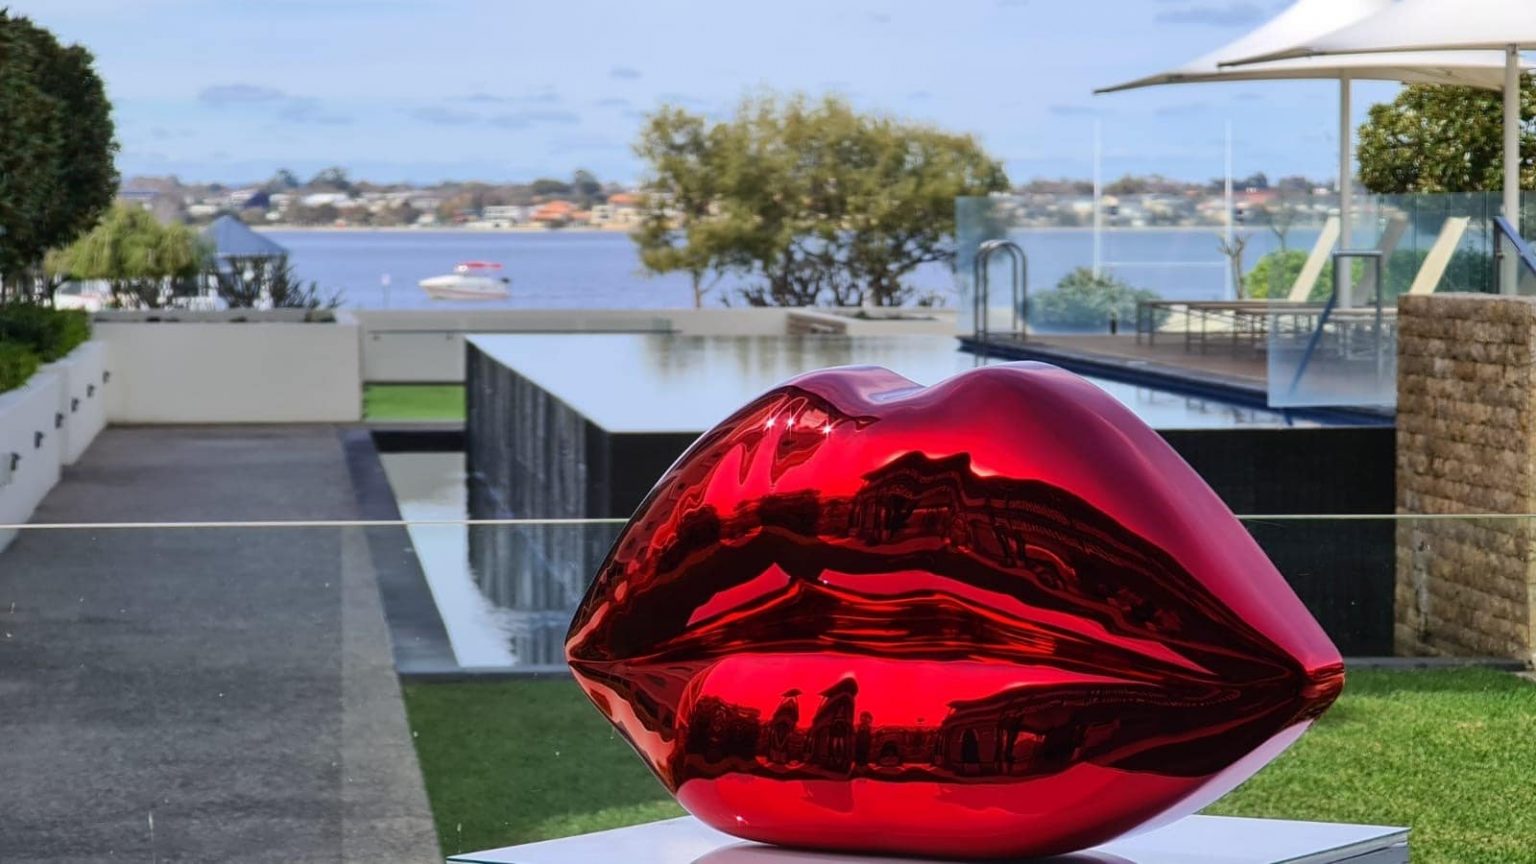 Niclas Castello's "The Kiss" sculpture product